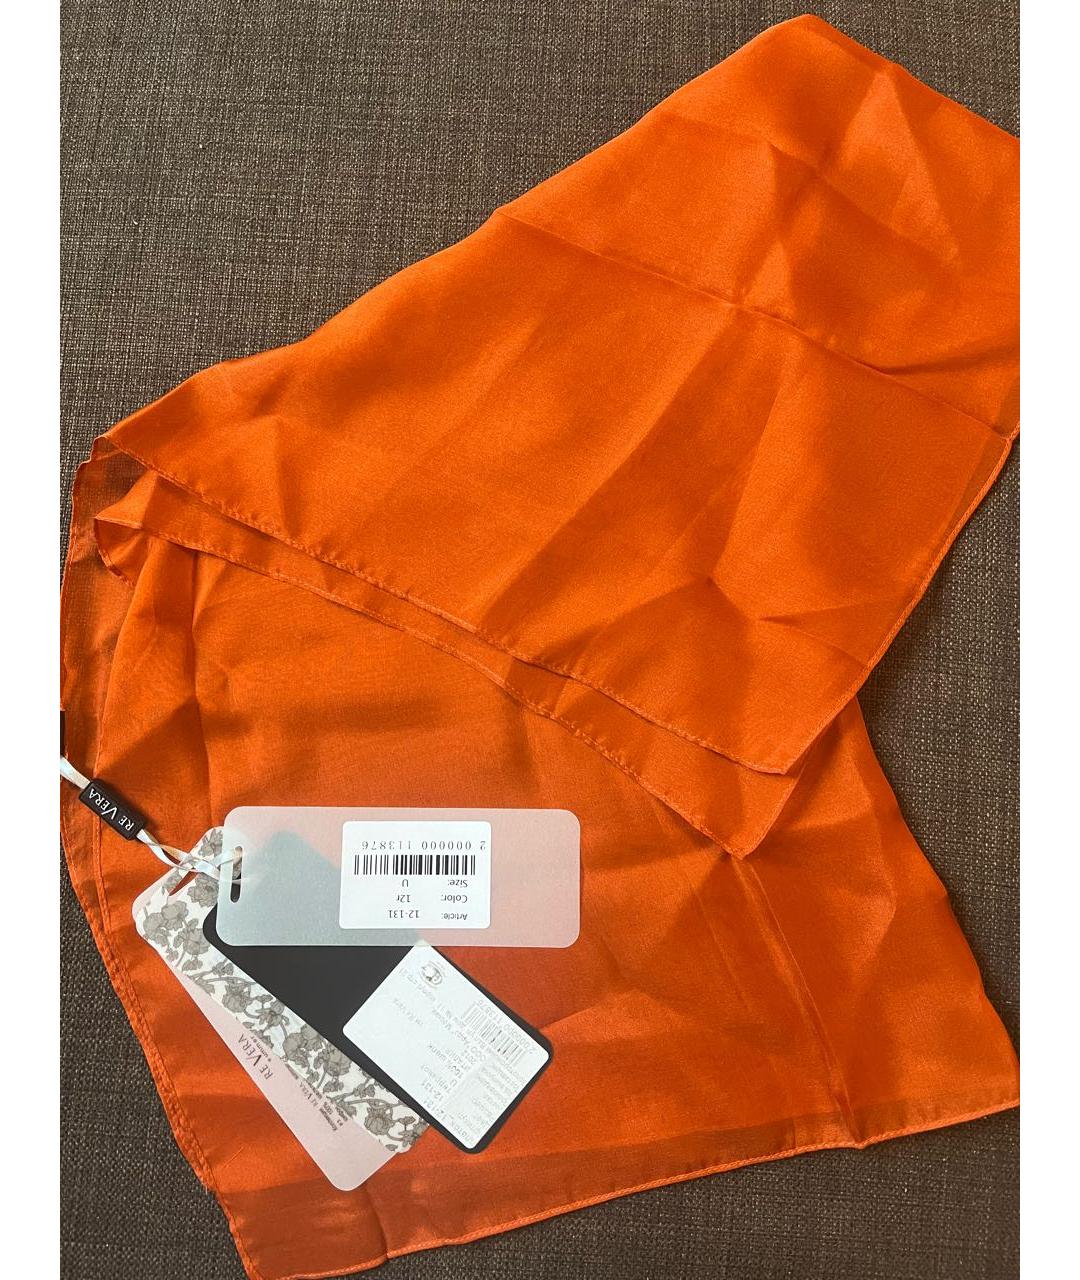 RE VERA Оранжевый шелковый платок, фото 2